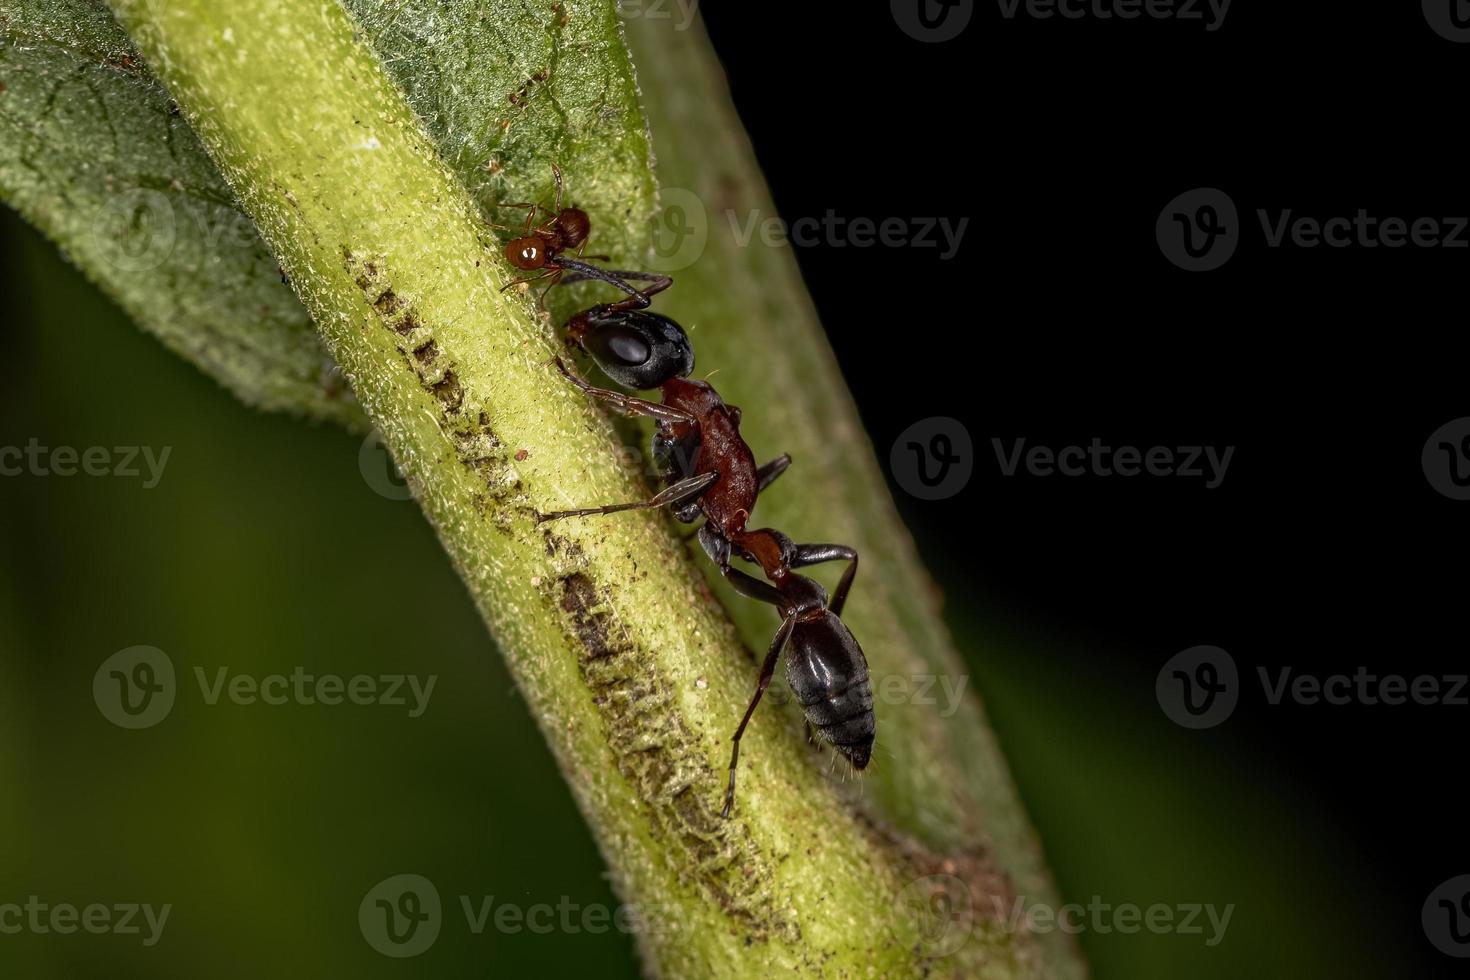 fêmea adulta de formiga galho foto